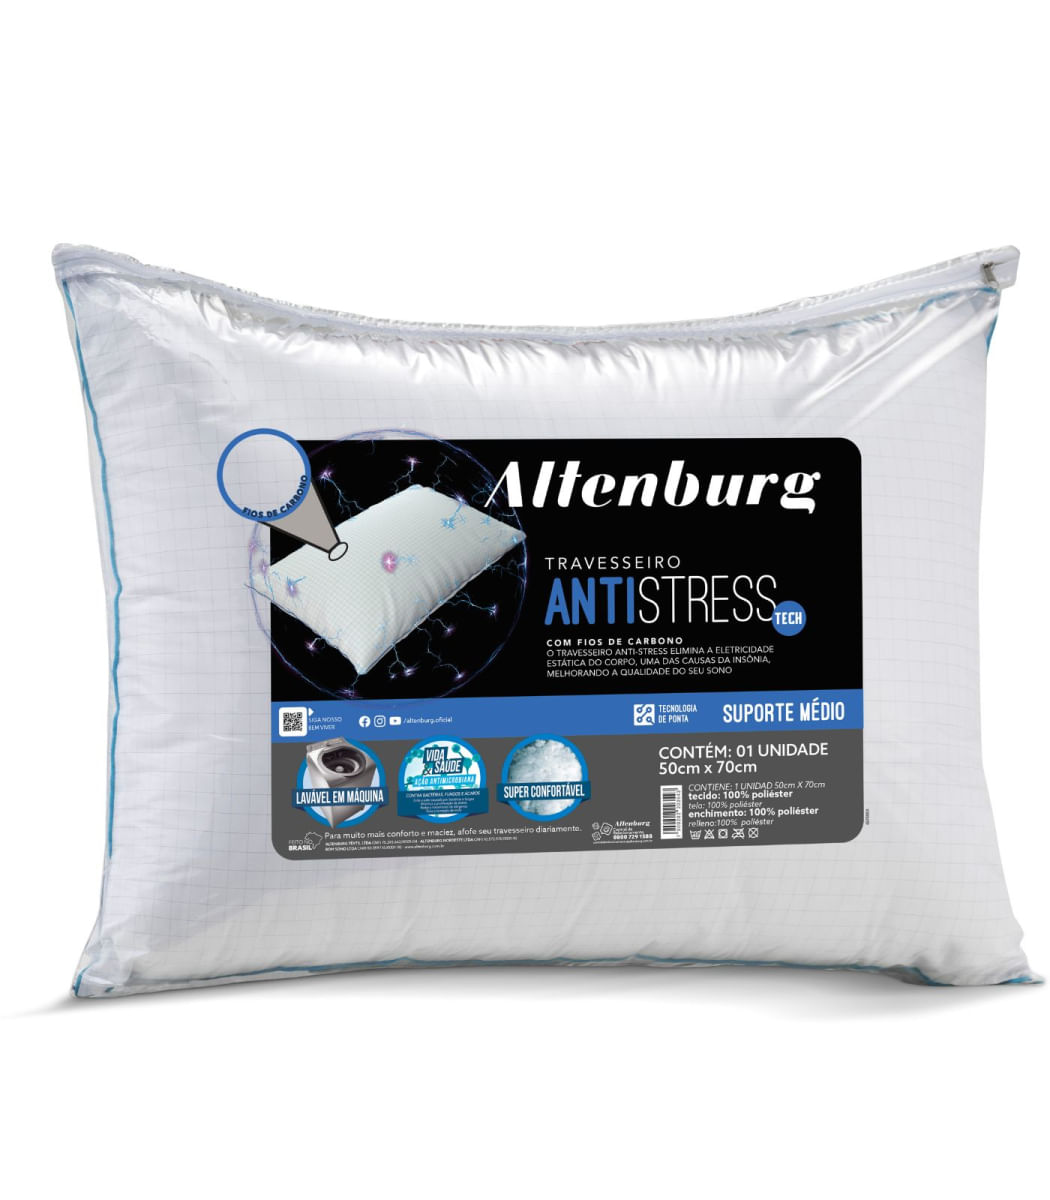 Travesseiro Altenburg Antistress Branco UN / Branco